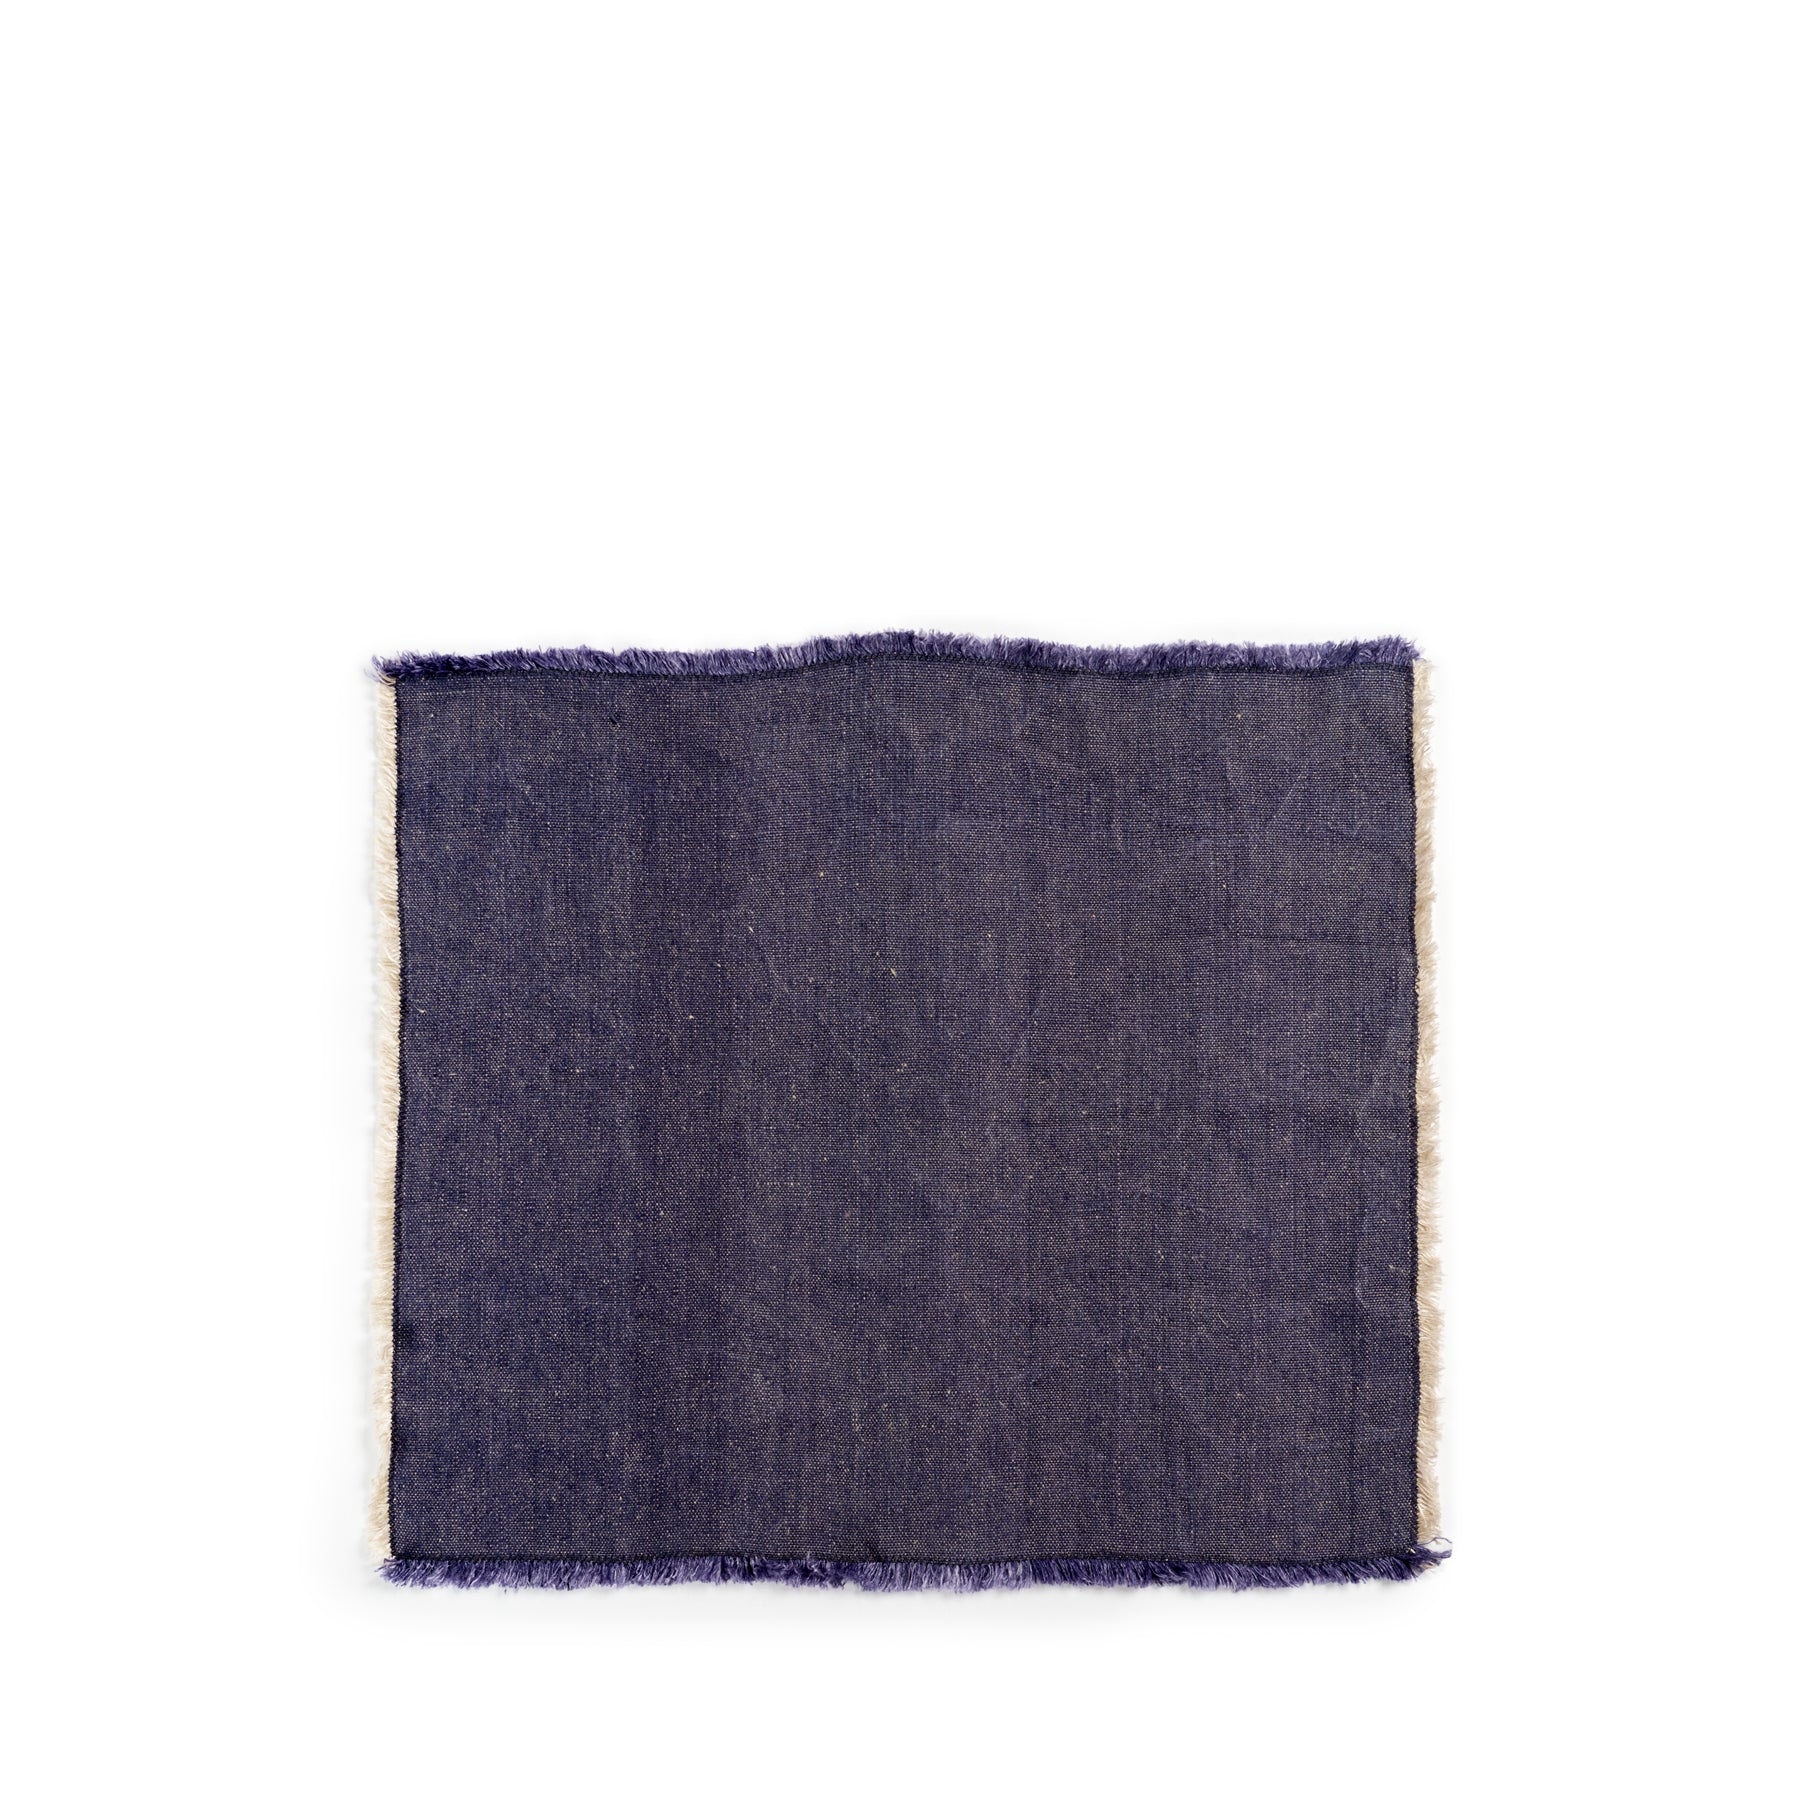 Hopsack Placemat in Denim Blue (Set of 2) Zoom Image 1